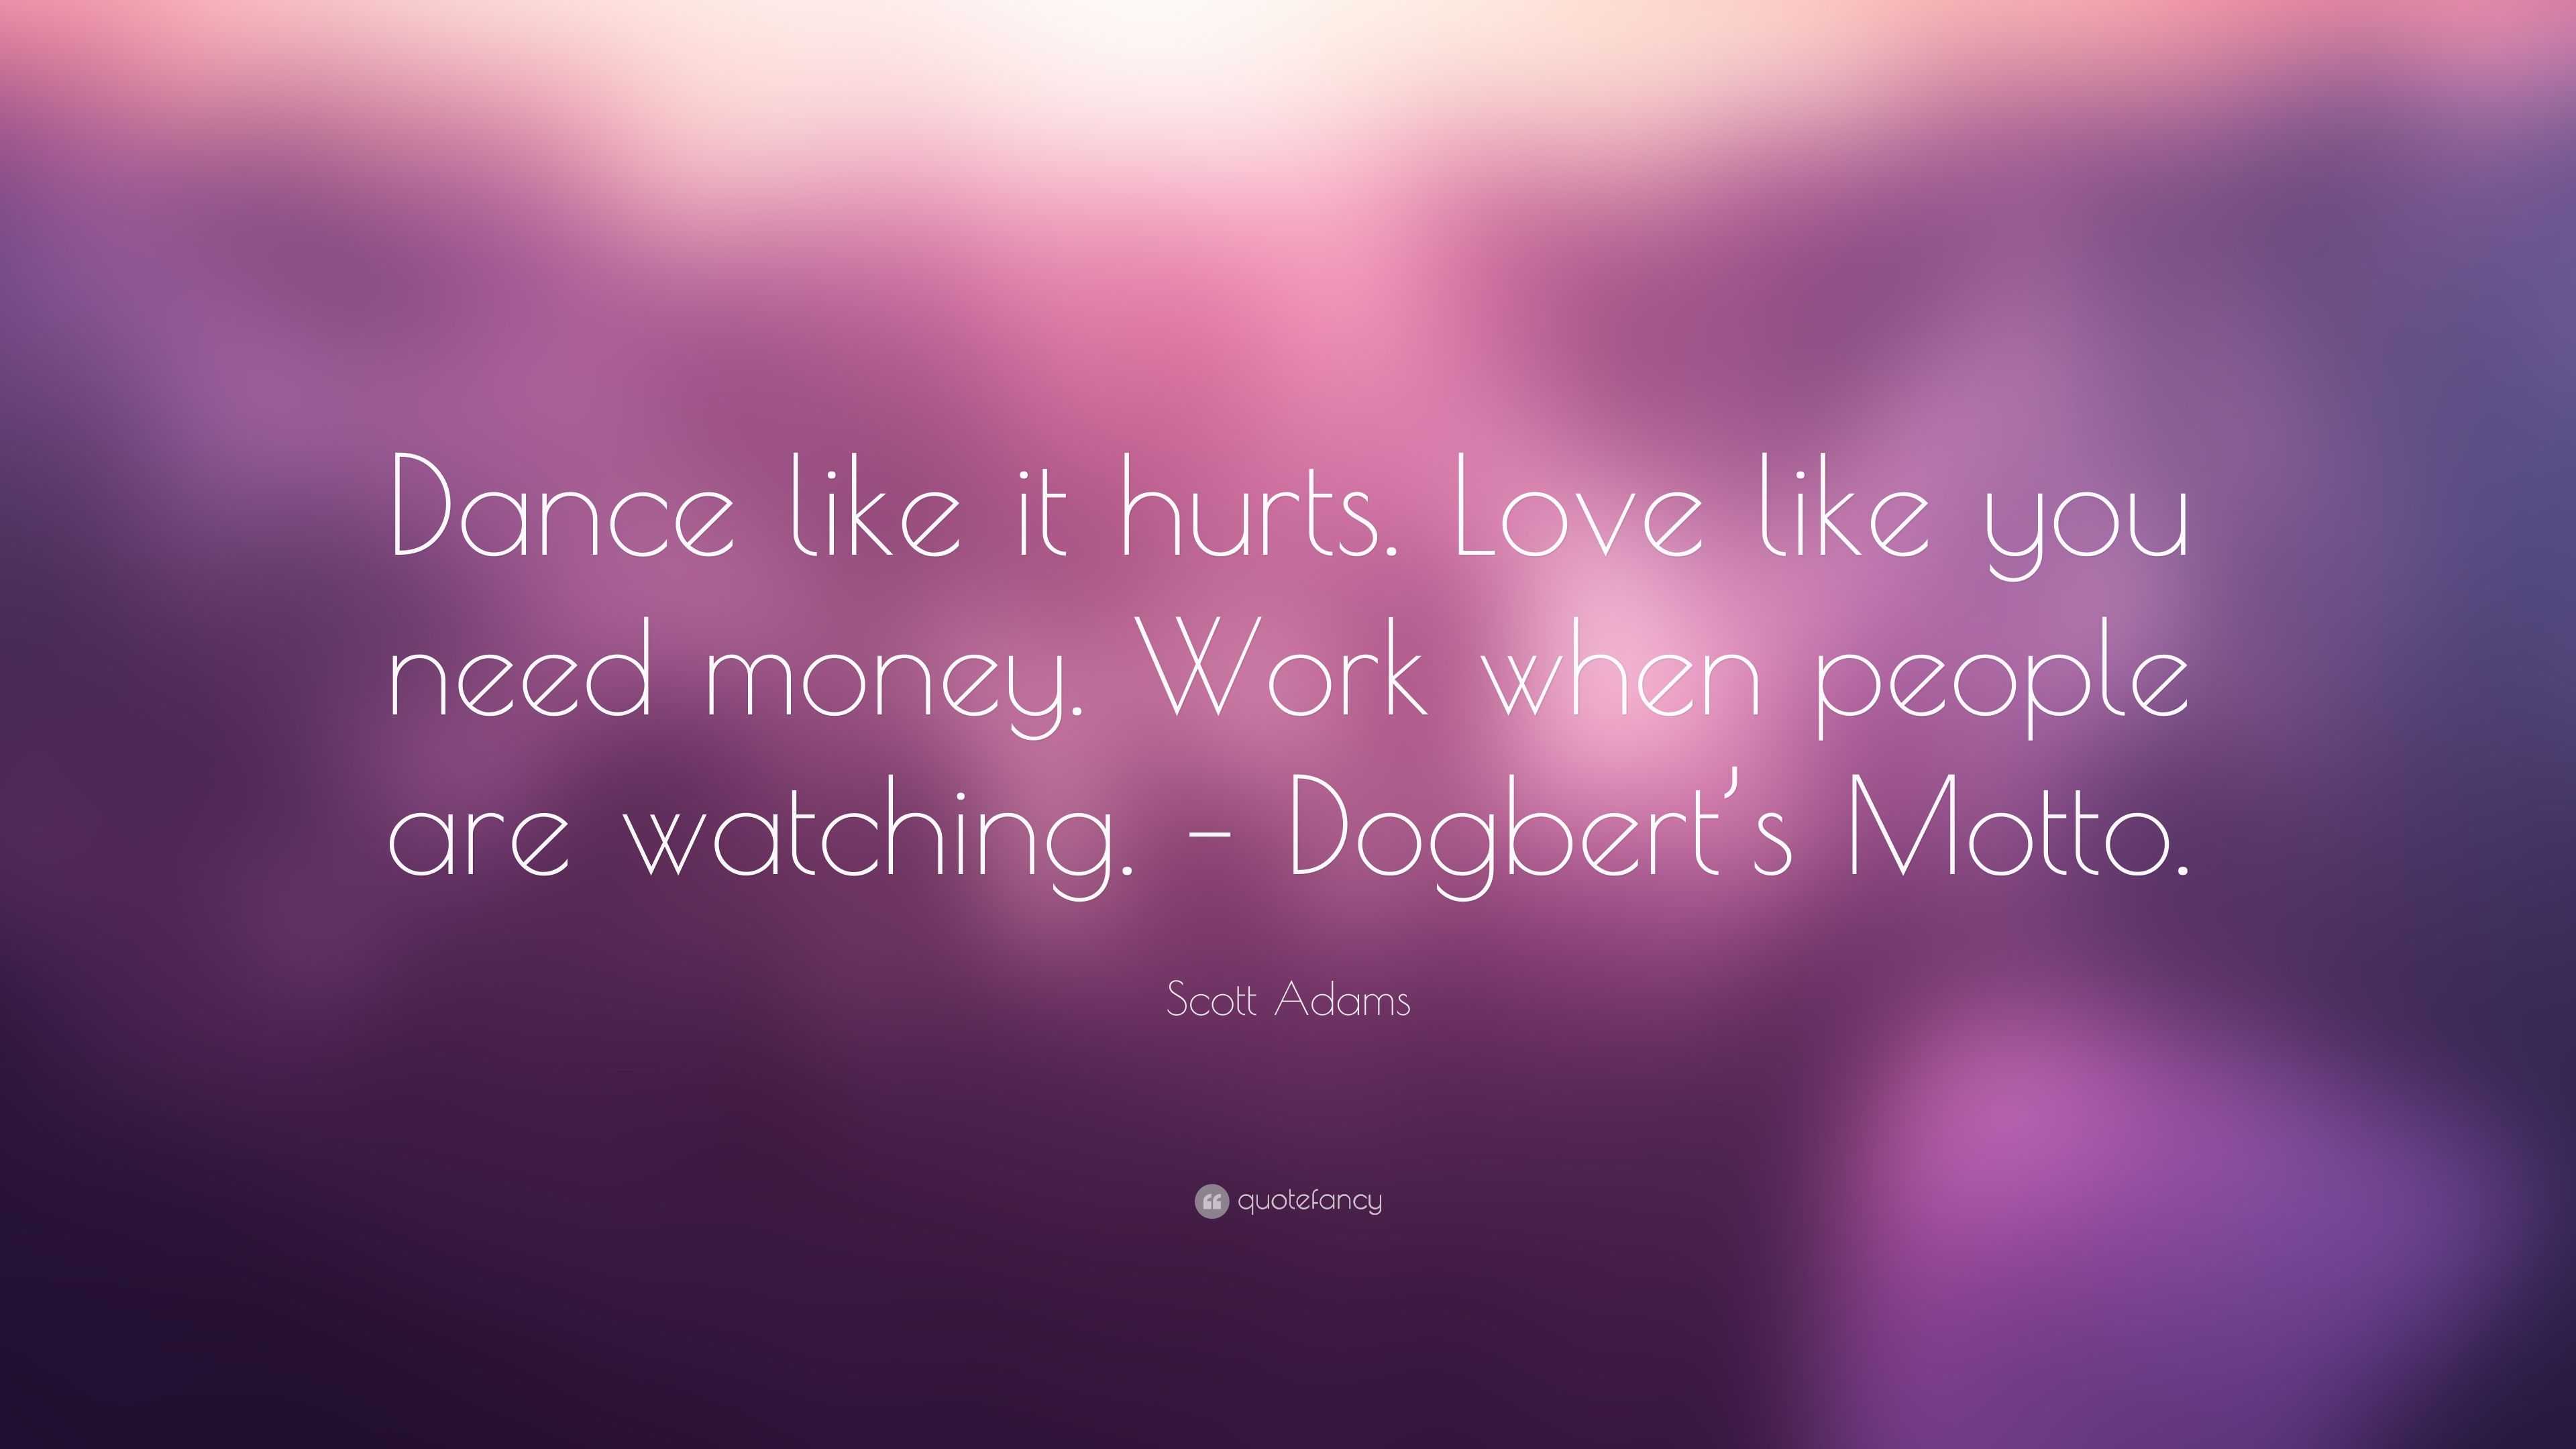 Scott Adams Quote “Dance like it hurts Love like you need money